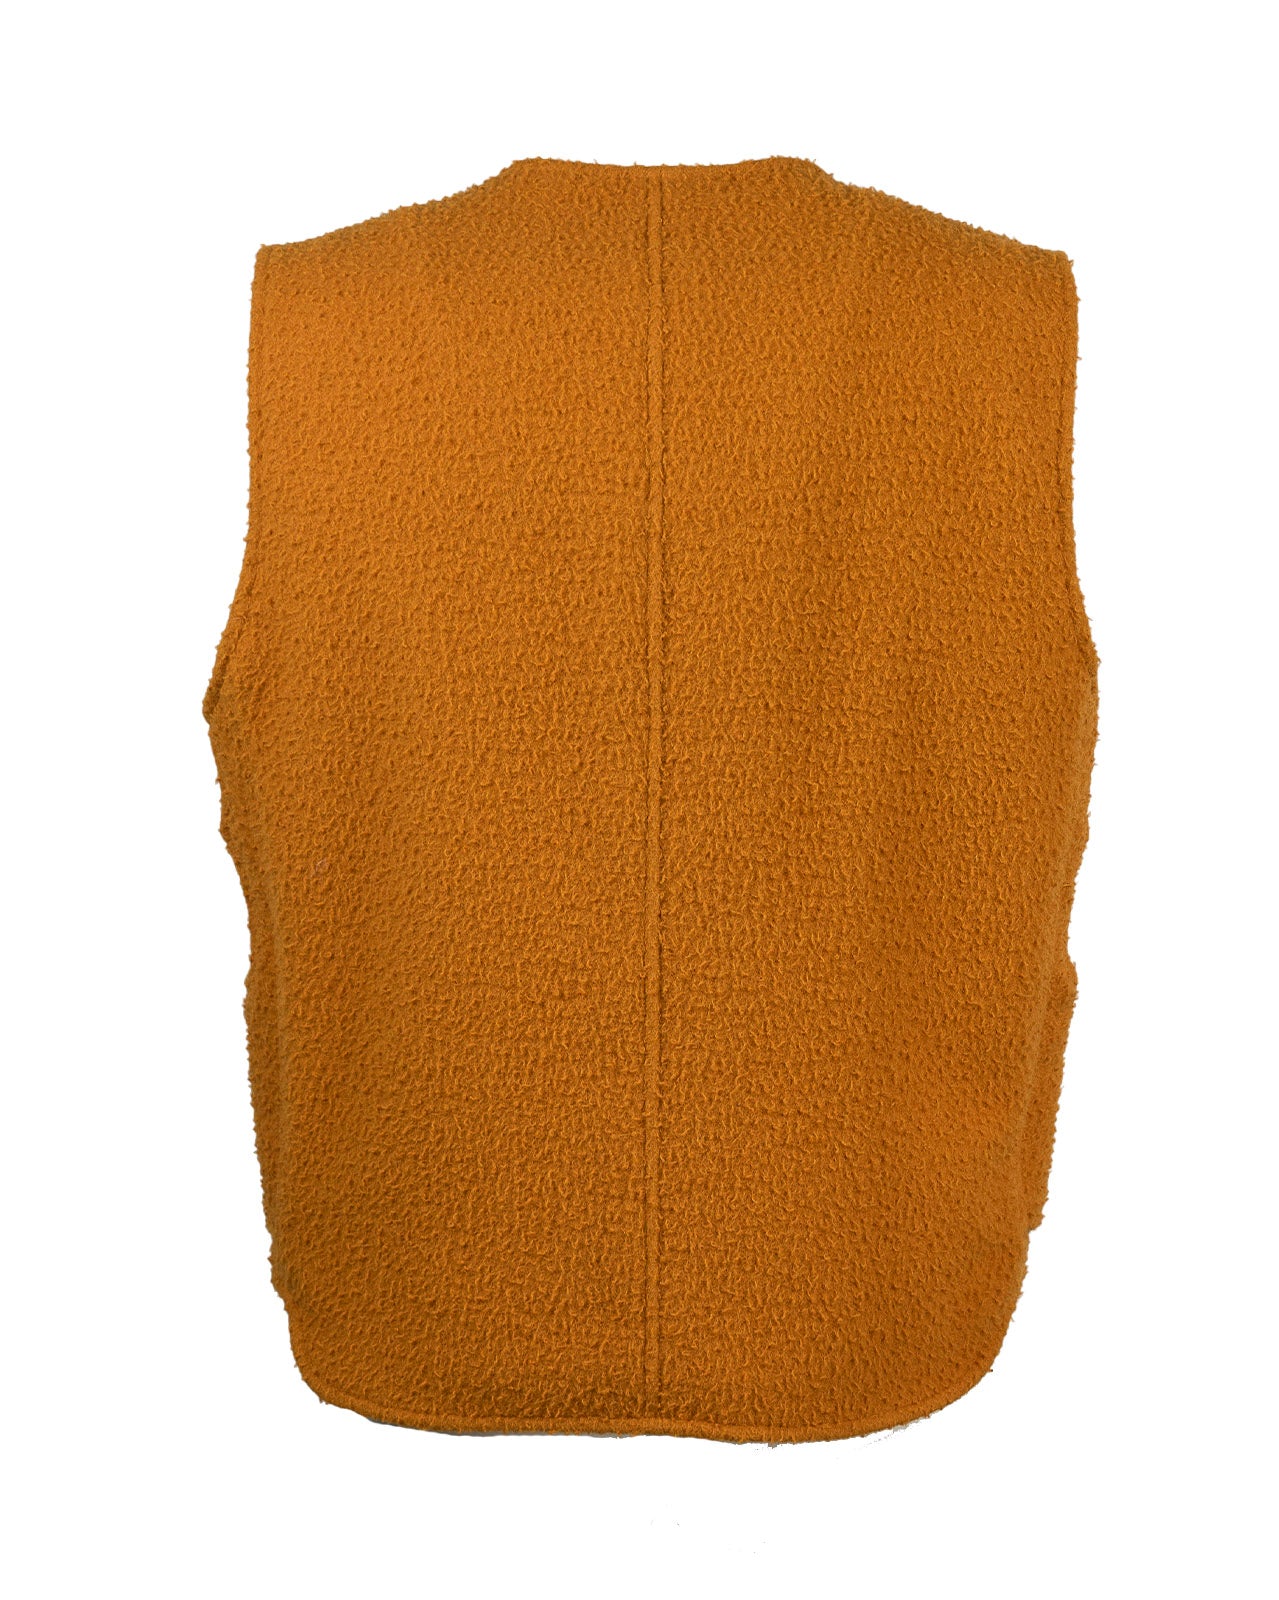 Iconic vest in herringbone wool